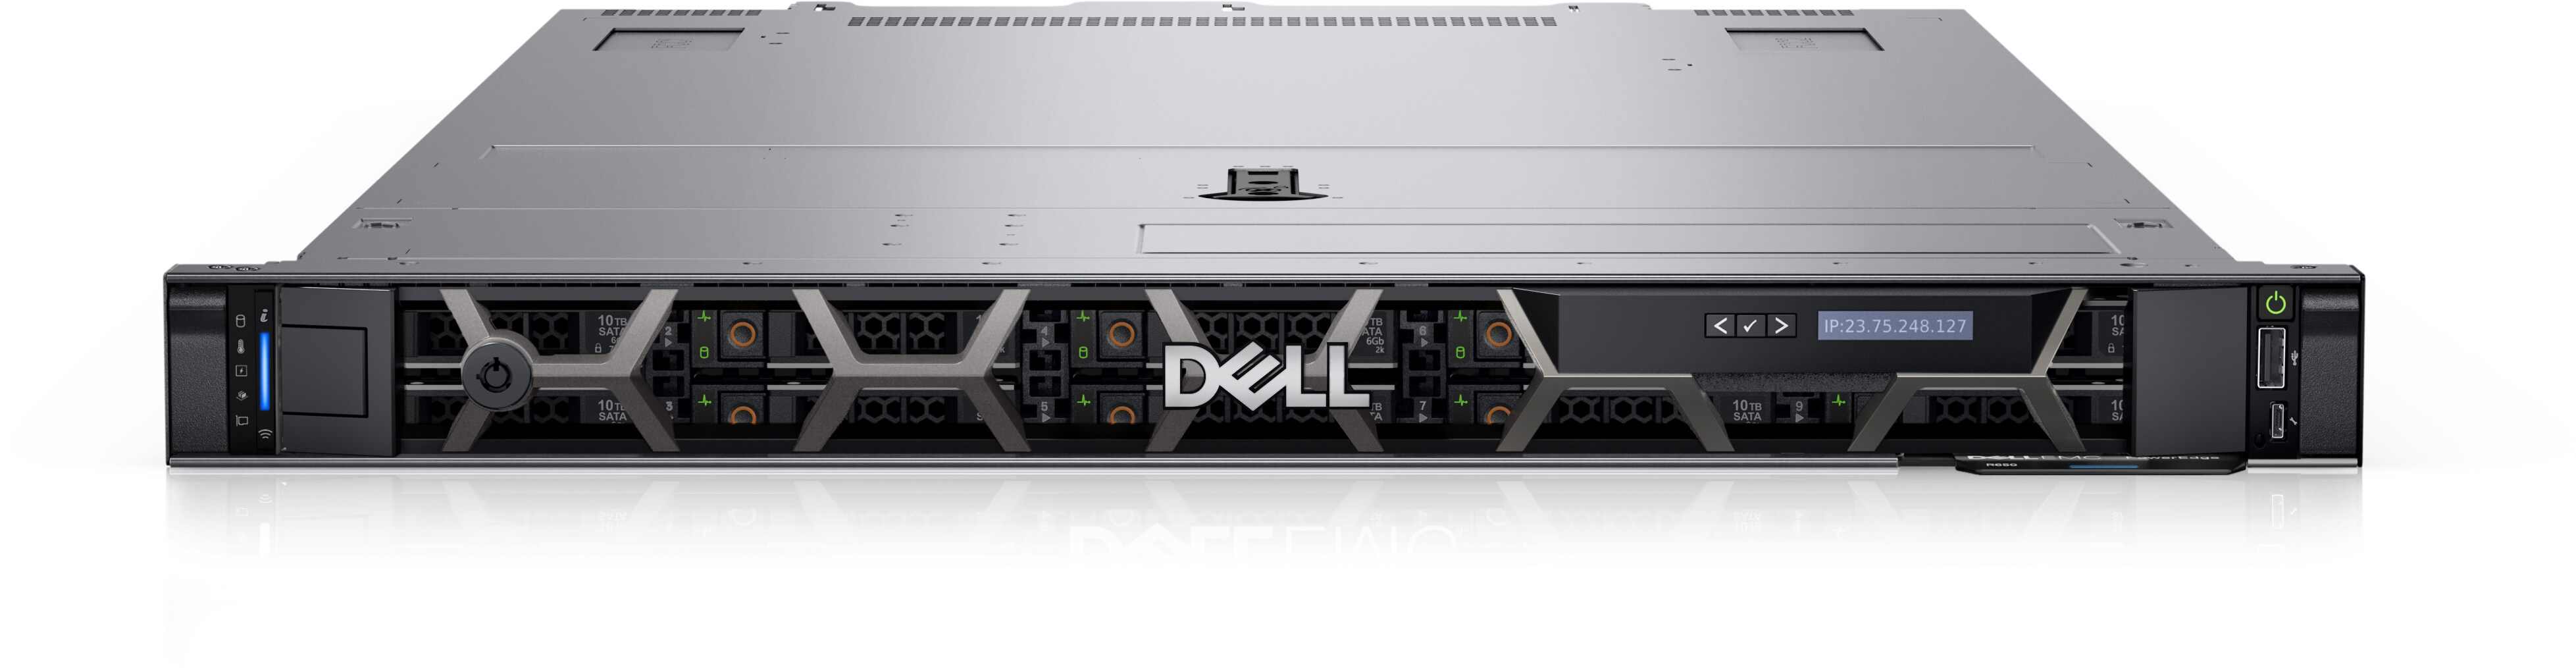 Dell EMC PowerEdge R650ラックサーバー | Dell 日本